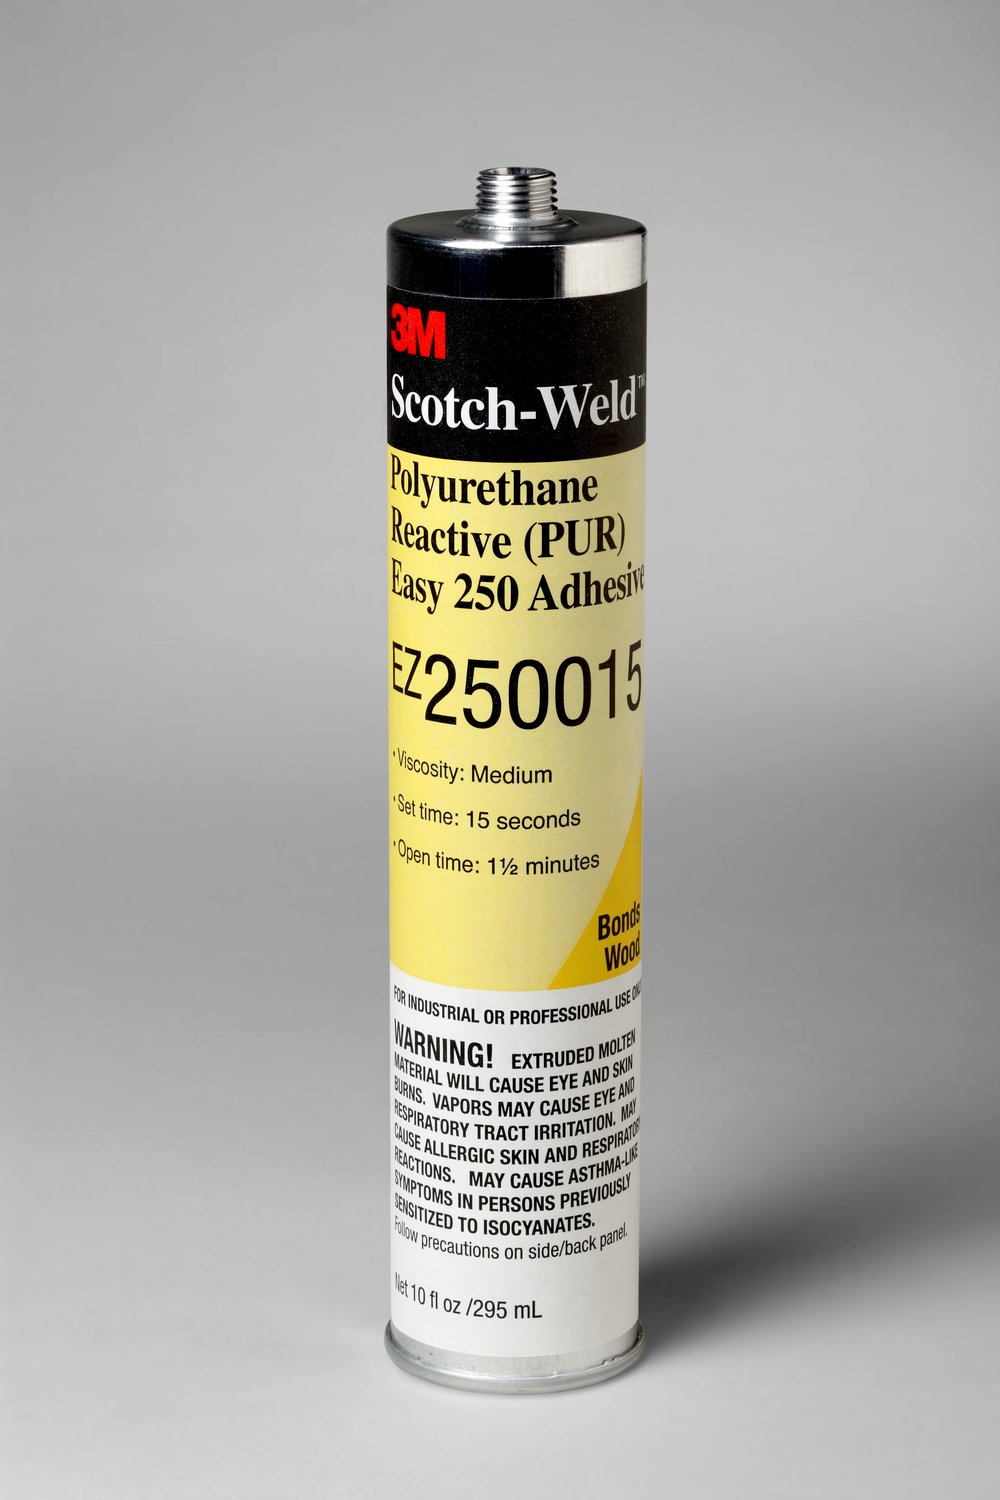 7000046529 - 3M Scotch-Weld PUR Adhesive EZ250015, Off-White, 1/10 Gallon Cartidge,
5 Each/Case